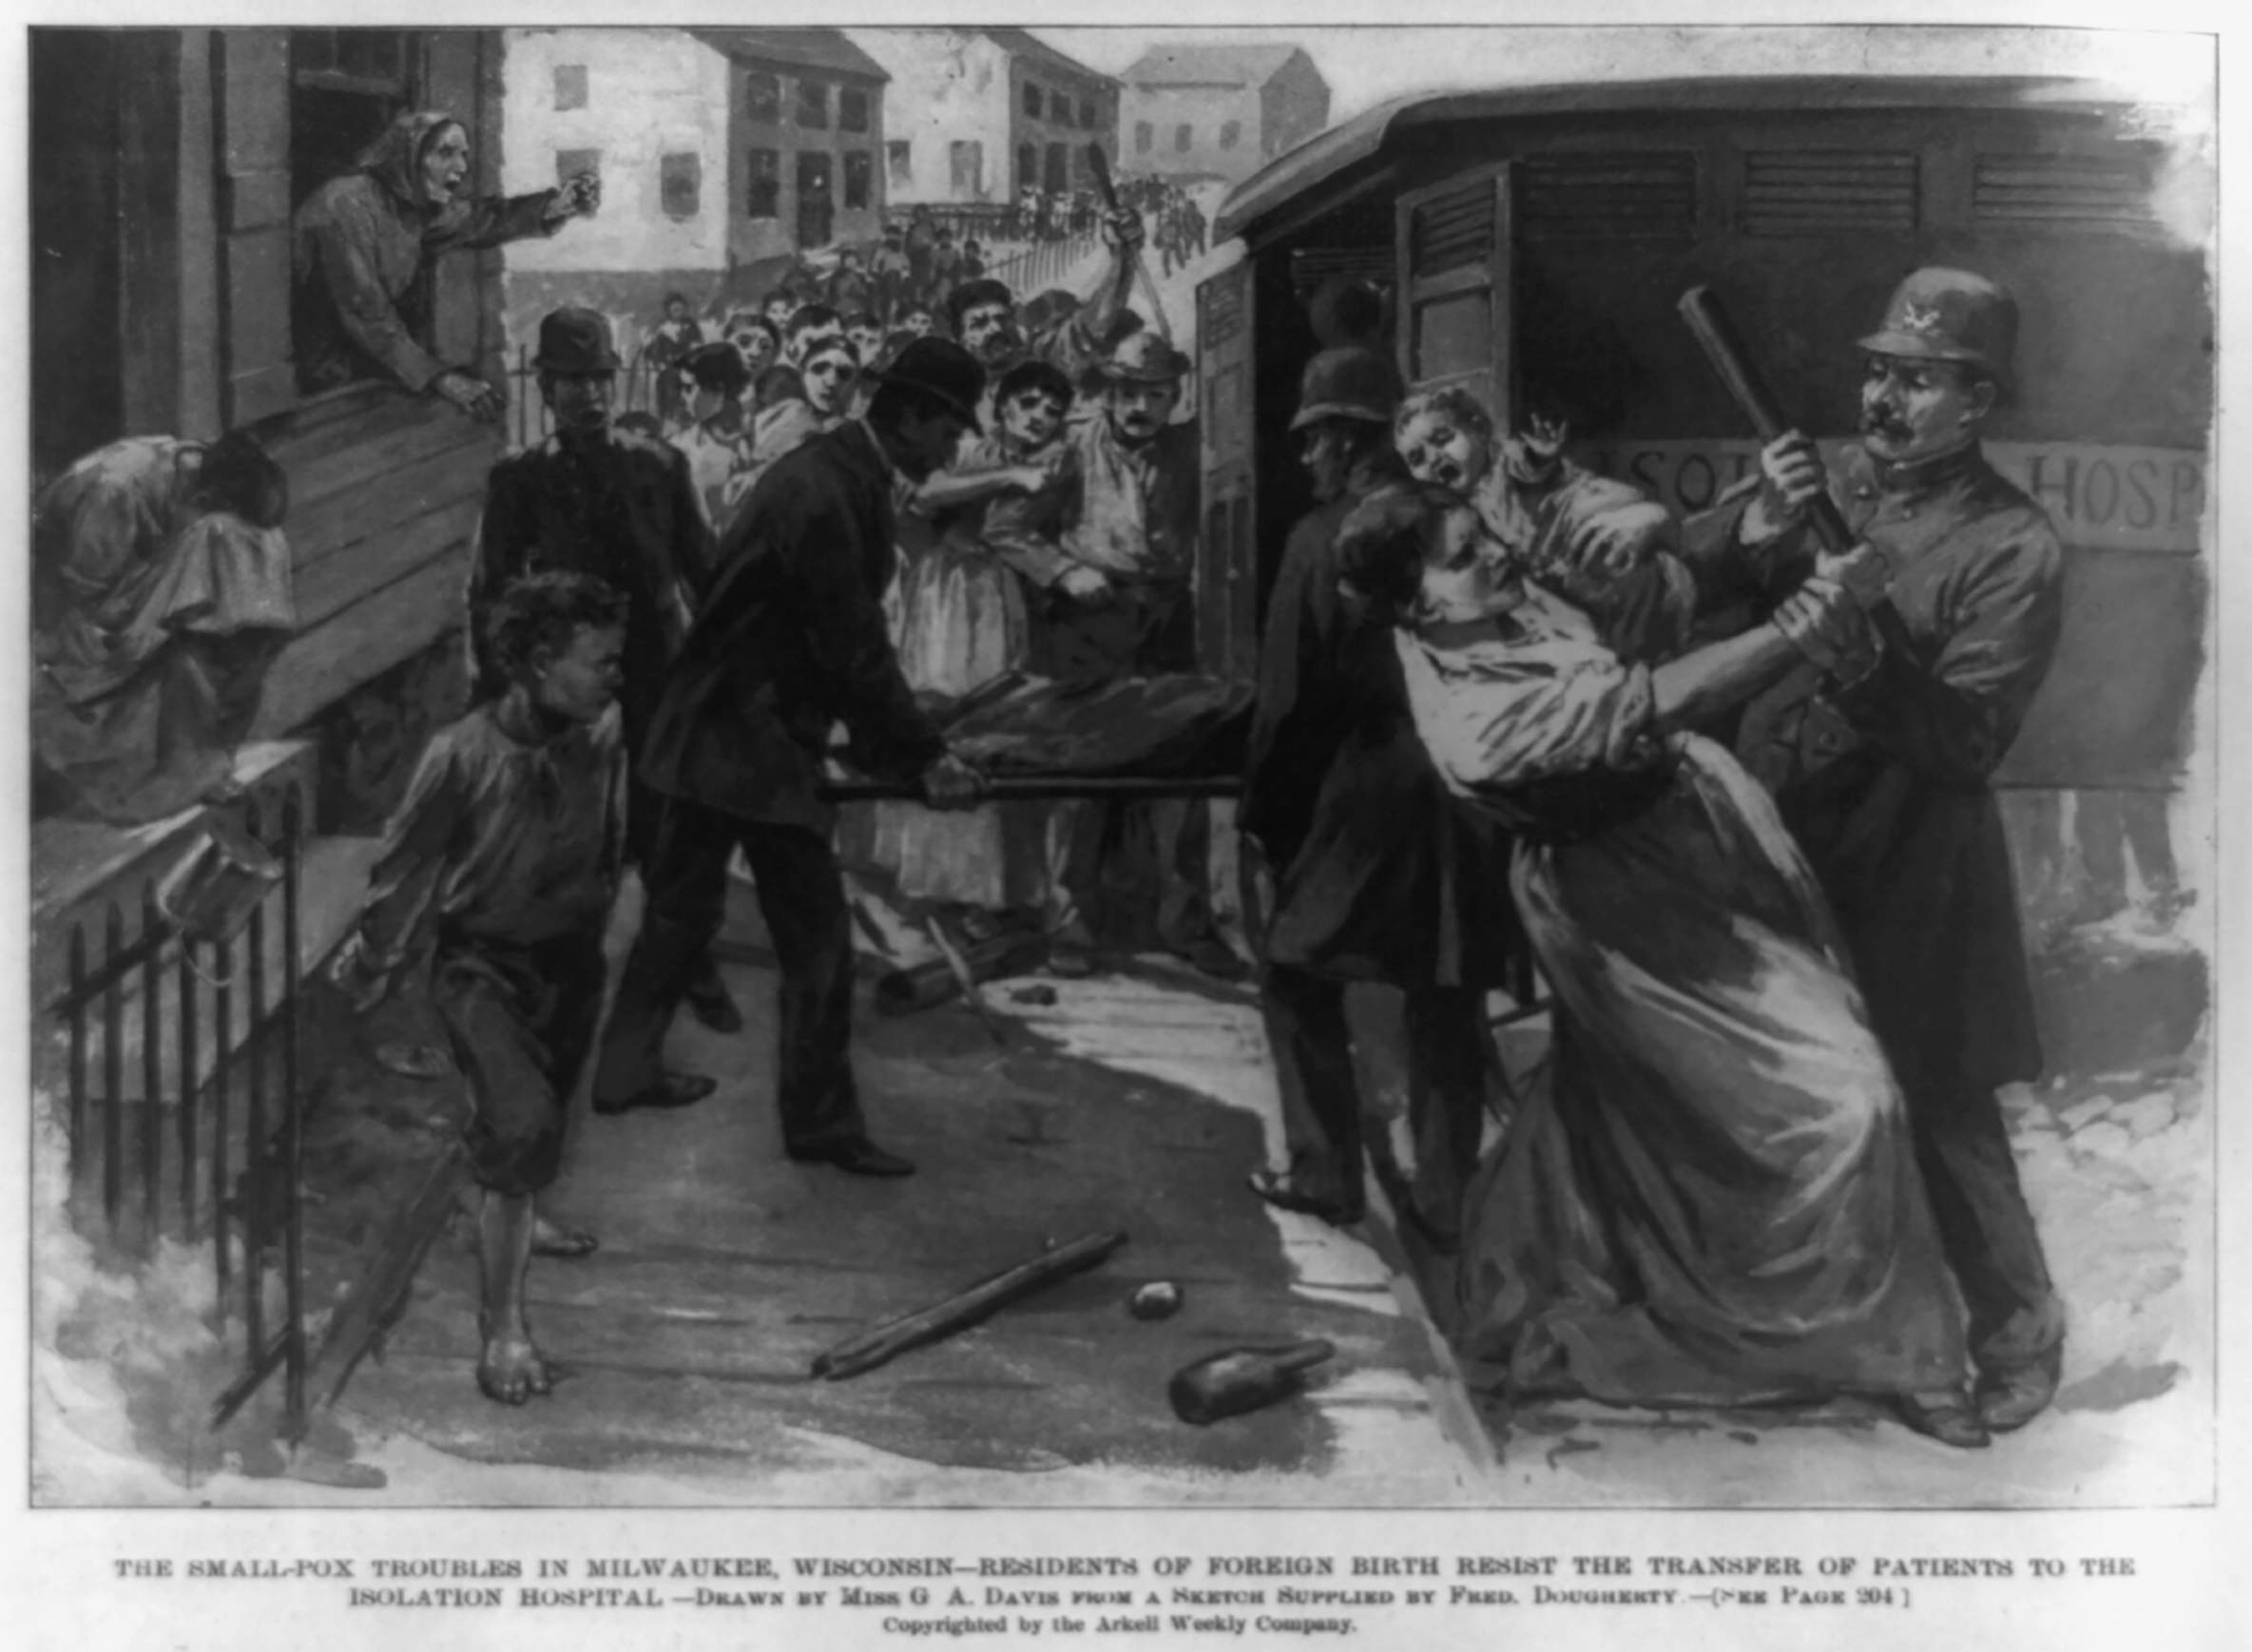 history-health-publichealth-smallpox-milwaukee-1894-illustration-dougherty-davis.jpg